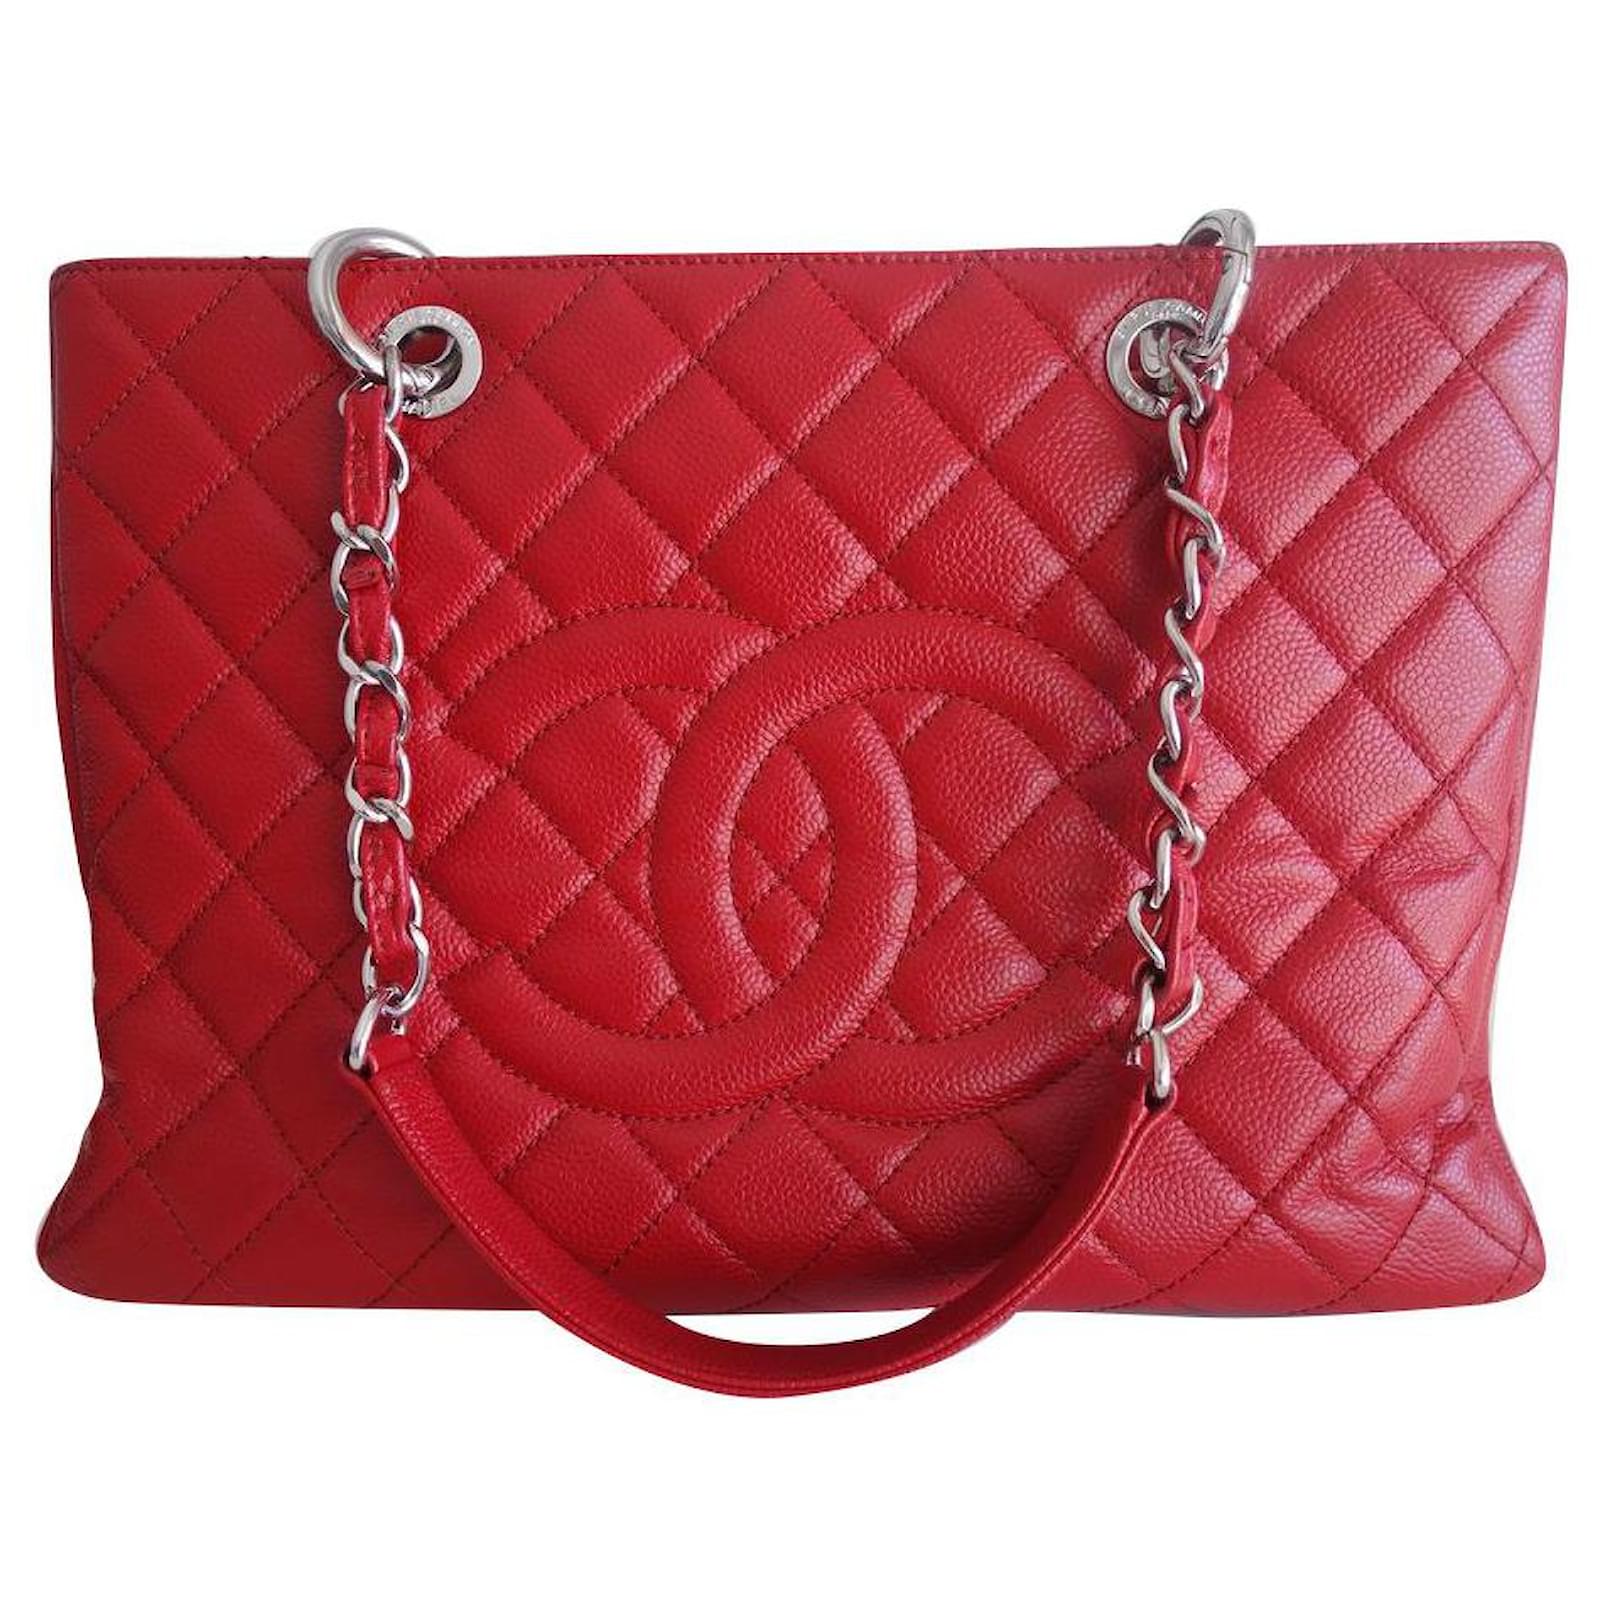 Handbags Chanel Chanel Red GST Bag